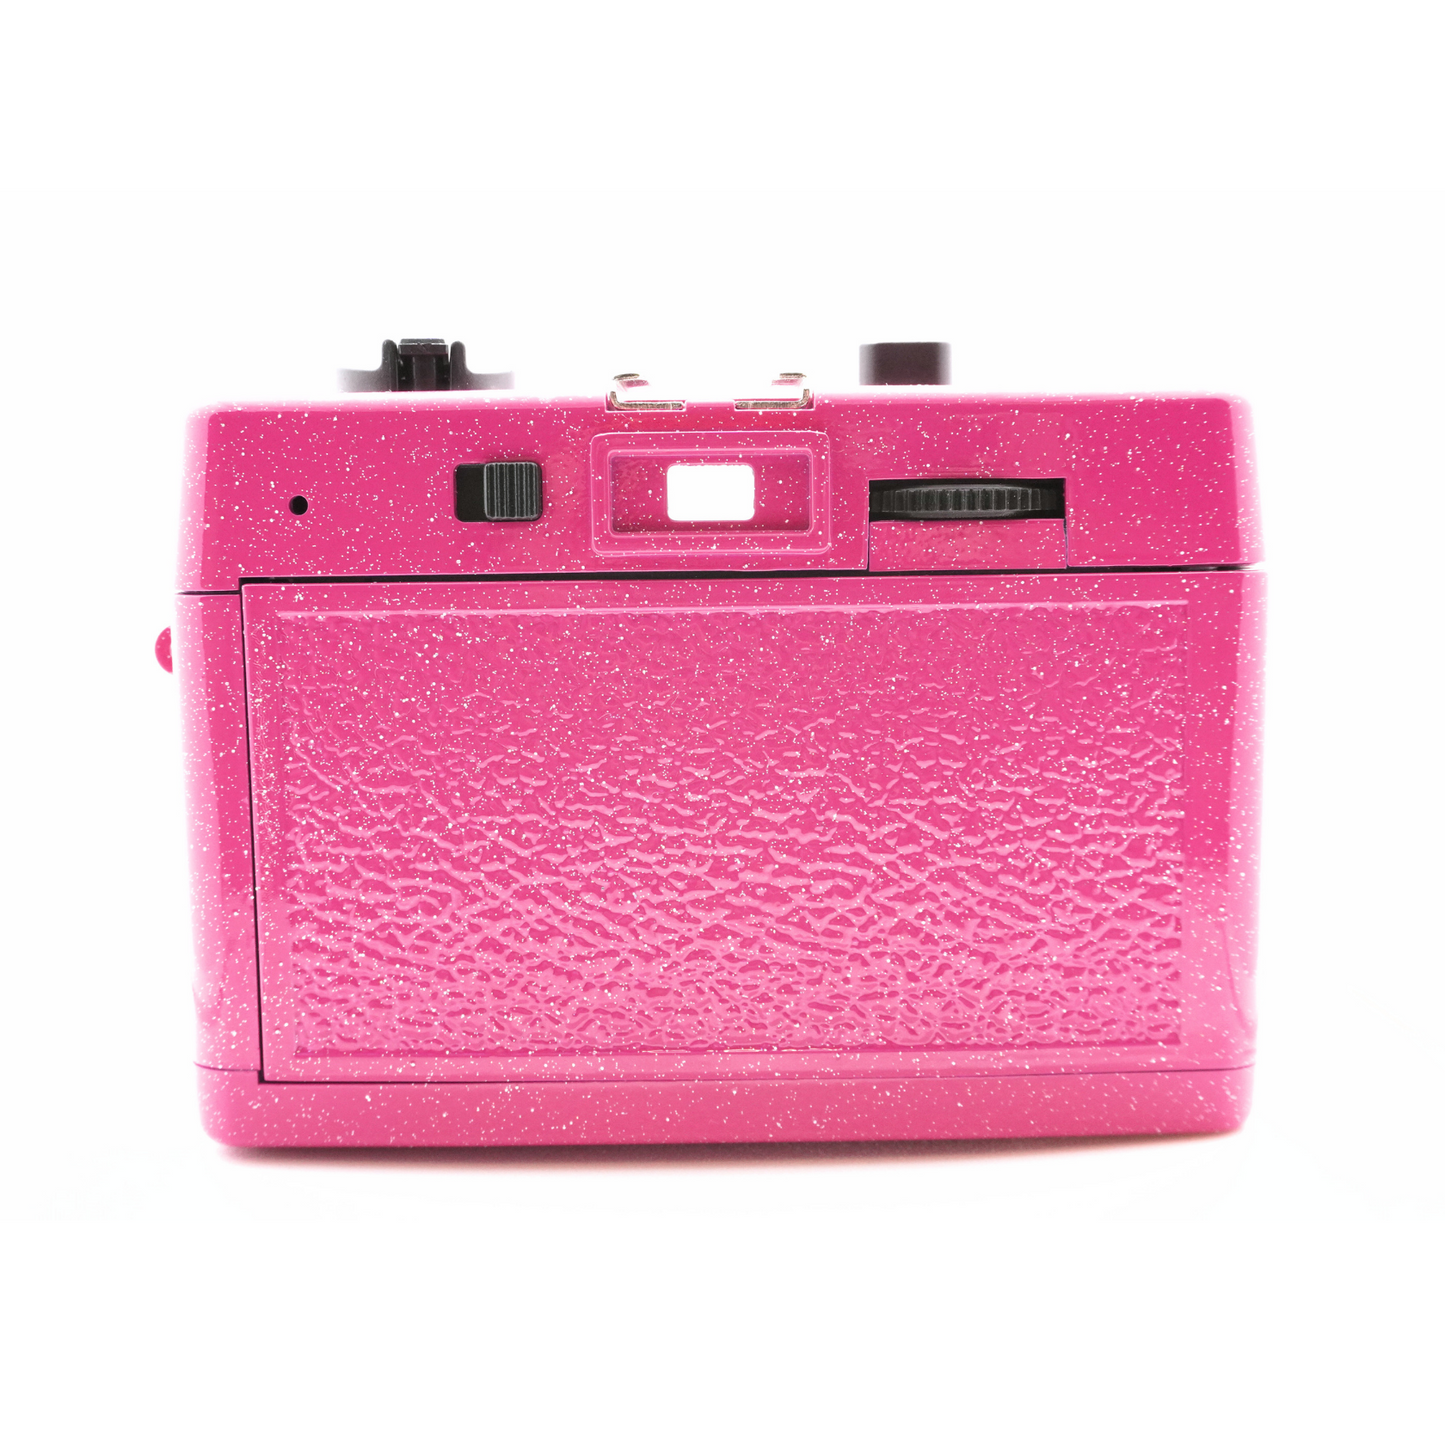 Holga 135FC Film Camera (Pink Sparkle)